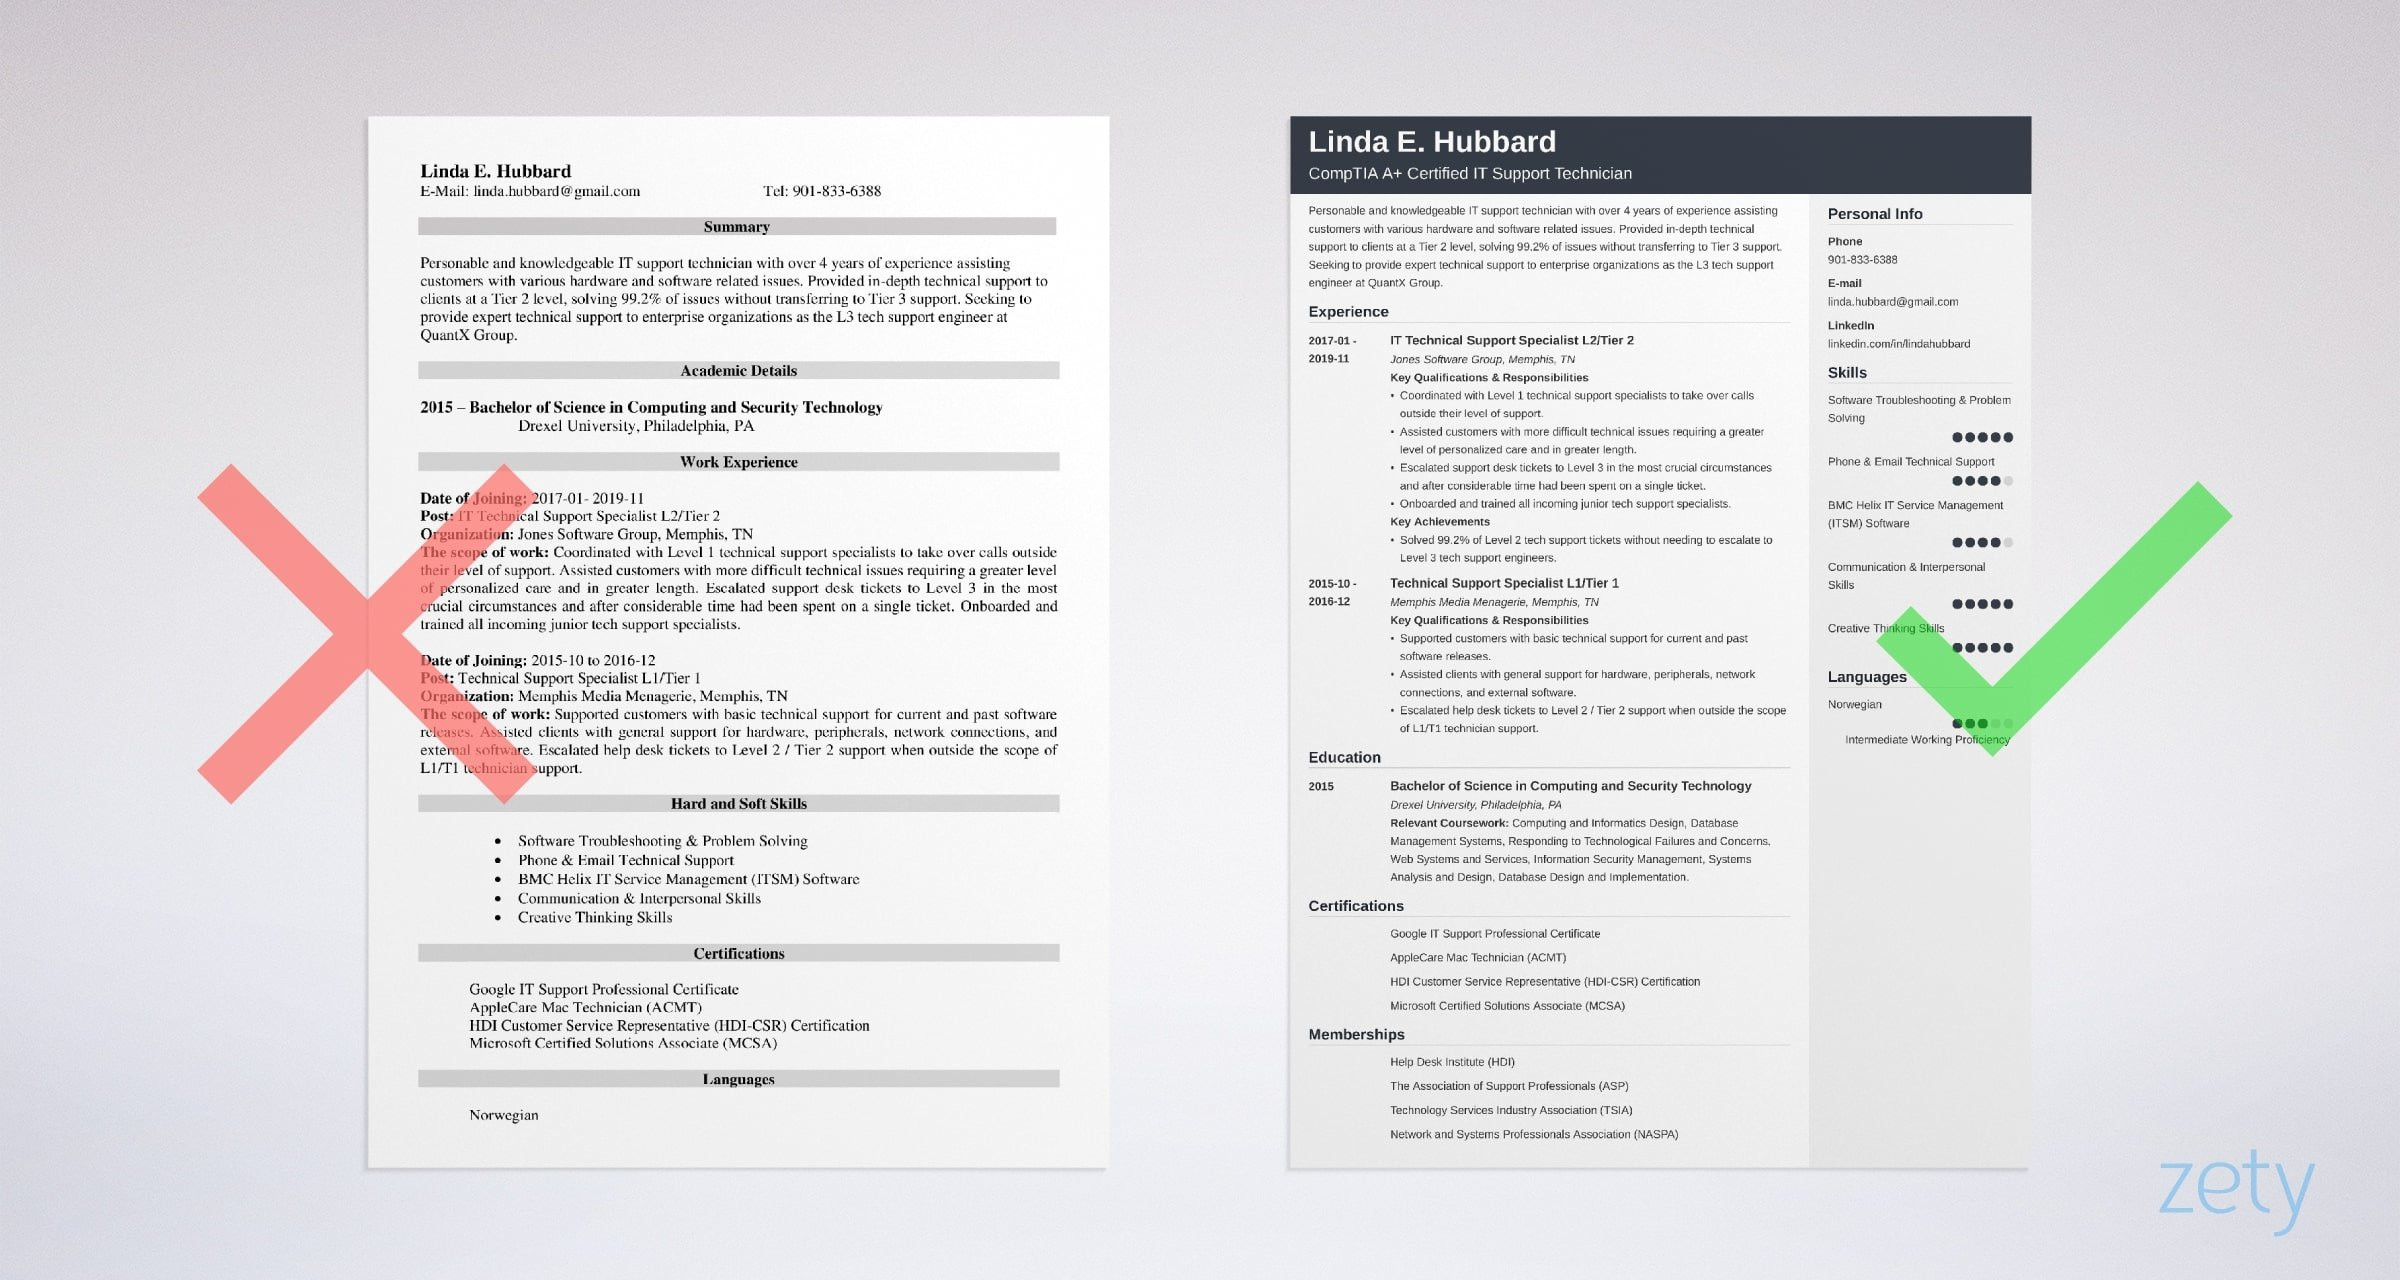 Sample Resume for L2 Support Engineer Technical Support Resume Sample & Job Description [20 Tips]